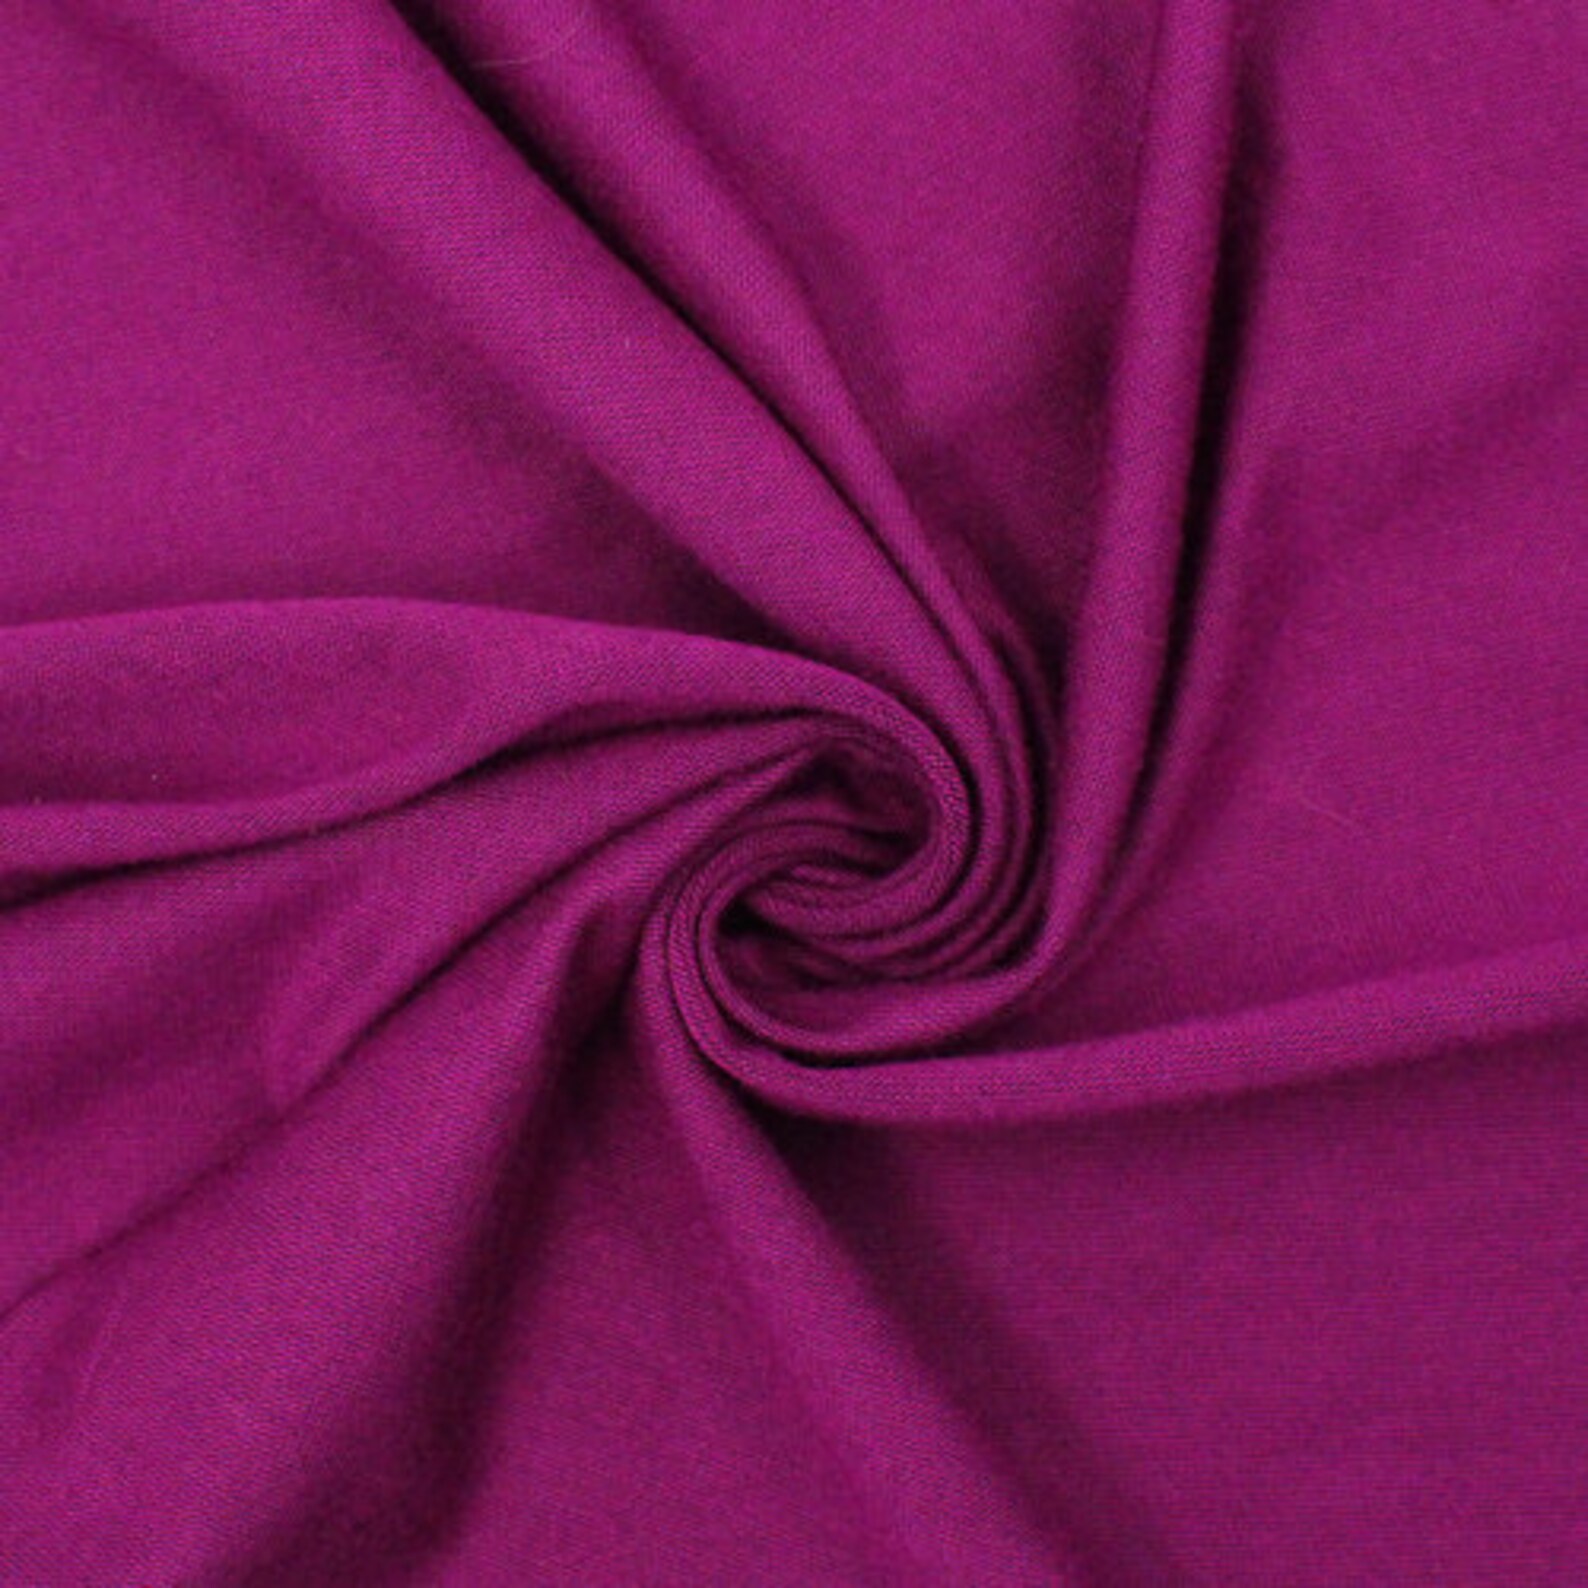 Magenta Dark Rayon Spandex Jersey Knit Fabric by the Yard 1 - Etsy